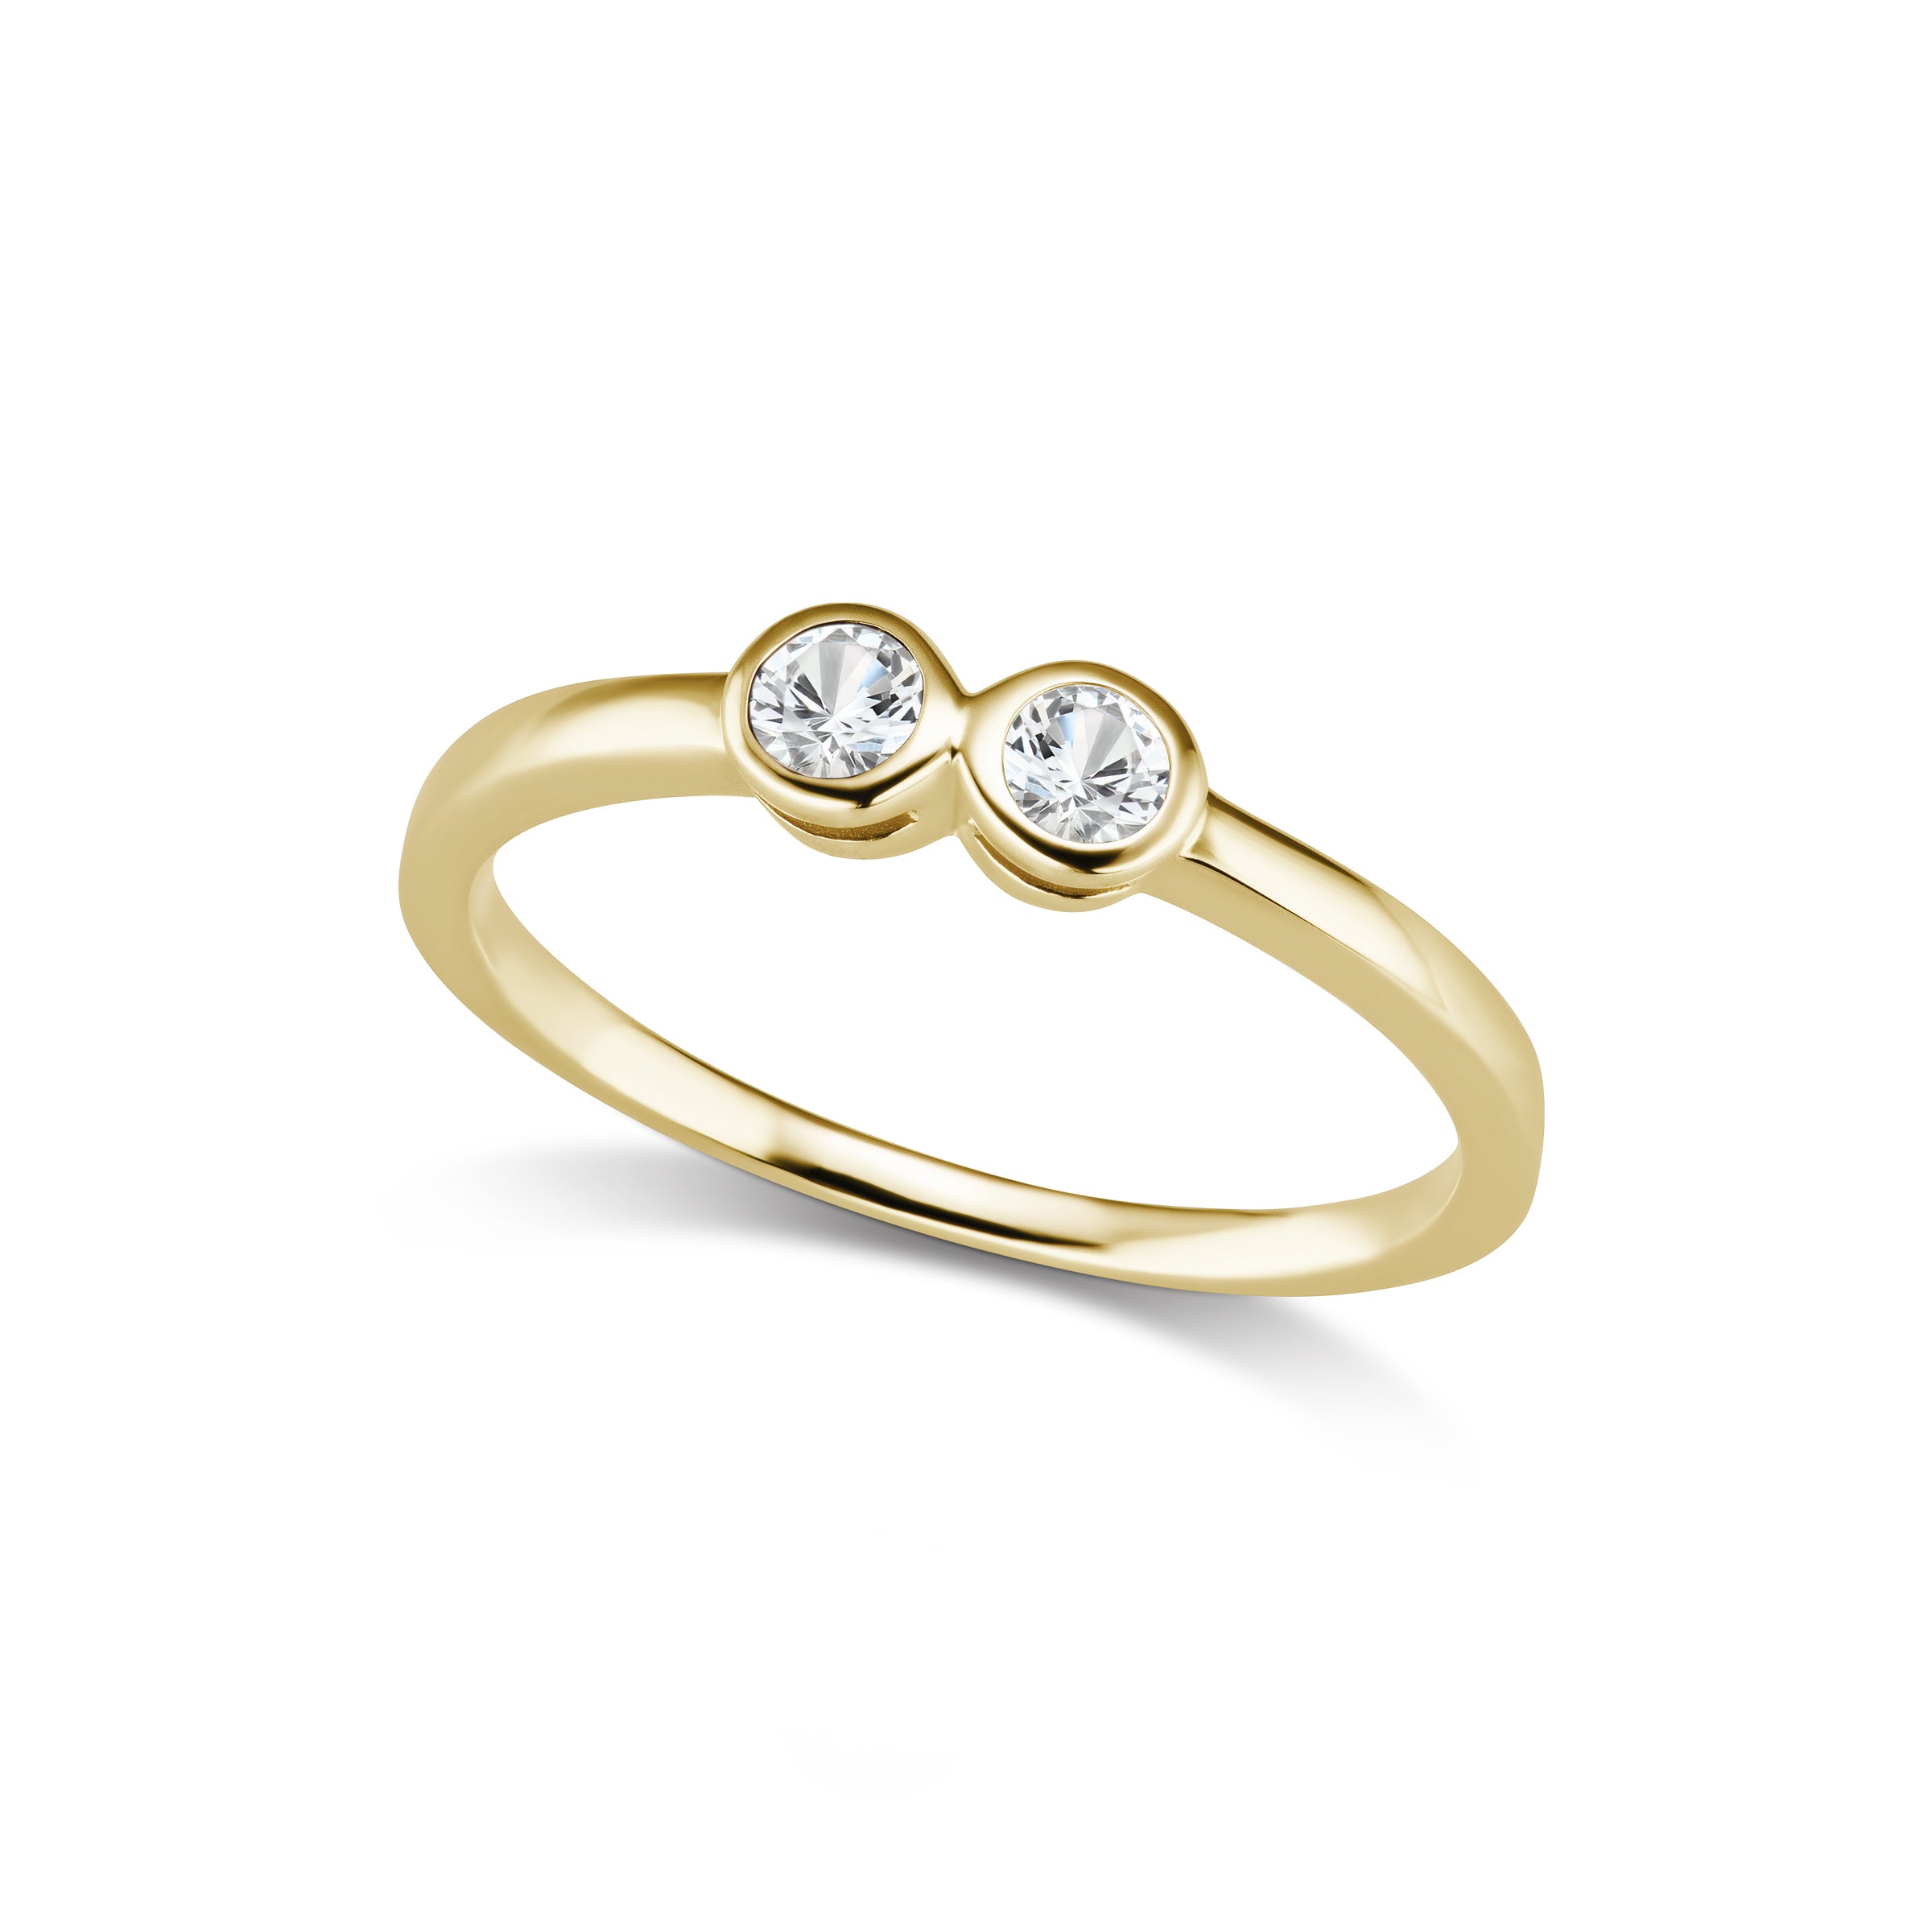 The Gold Two Diamond Confetti Ring